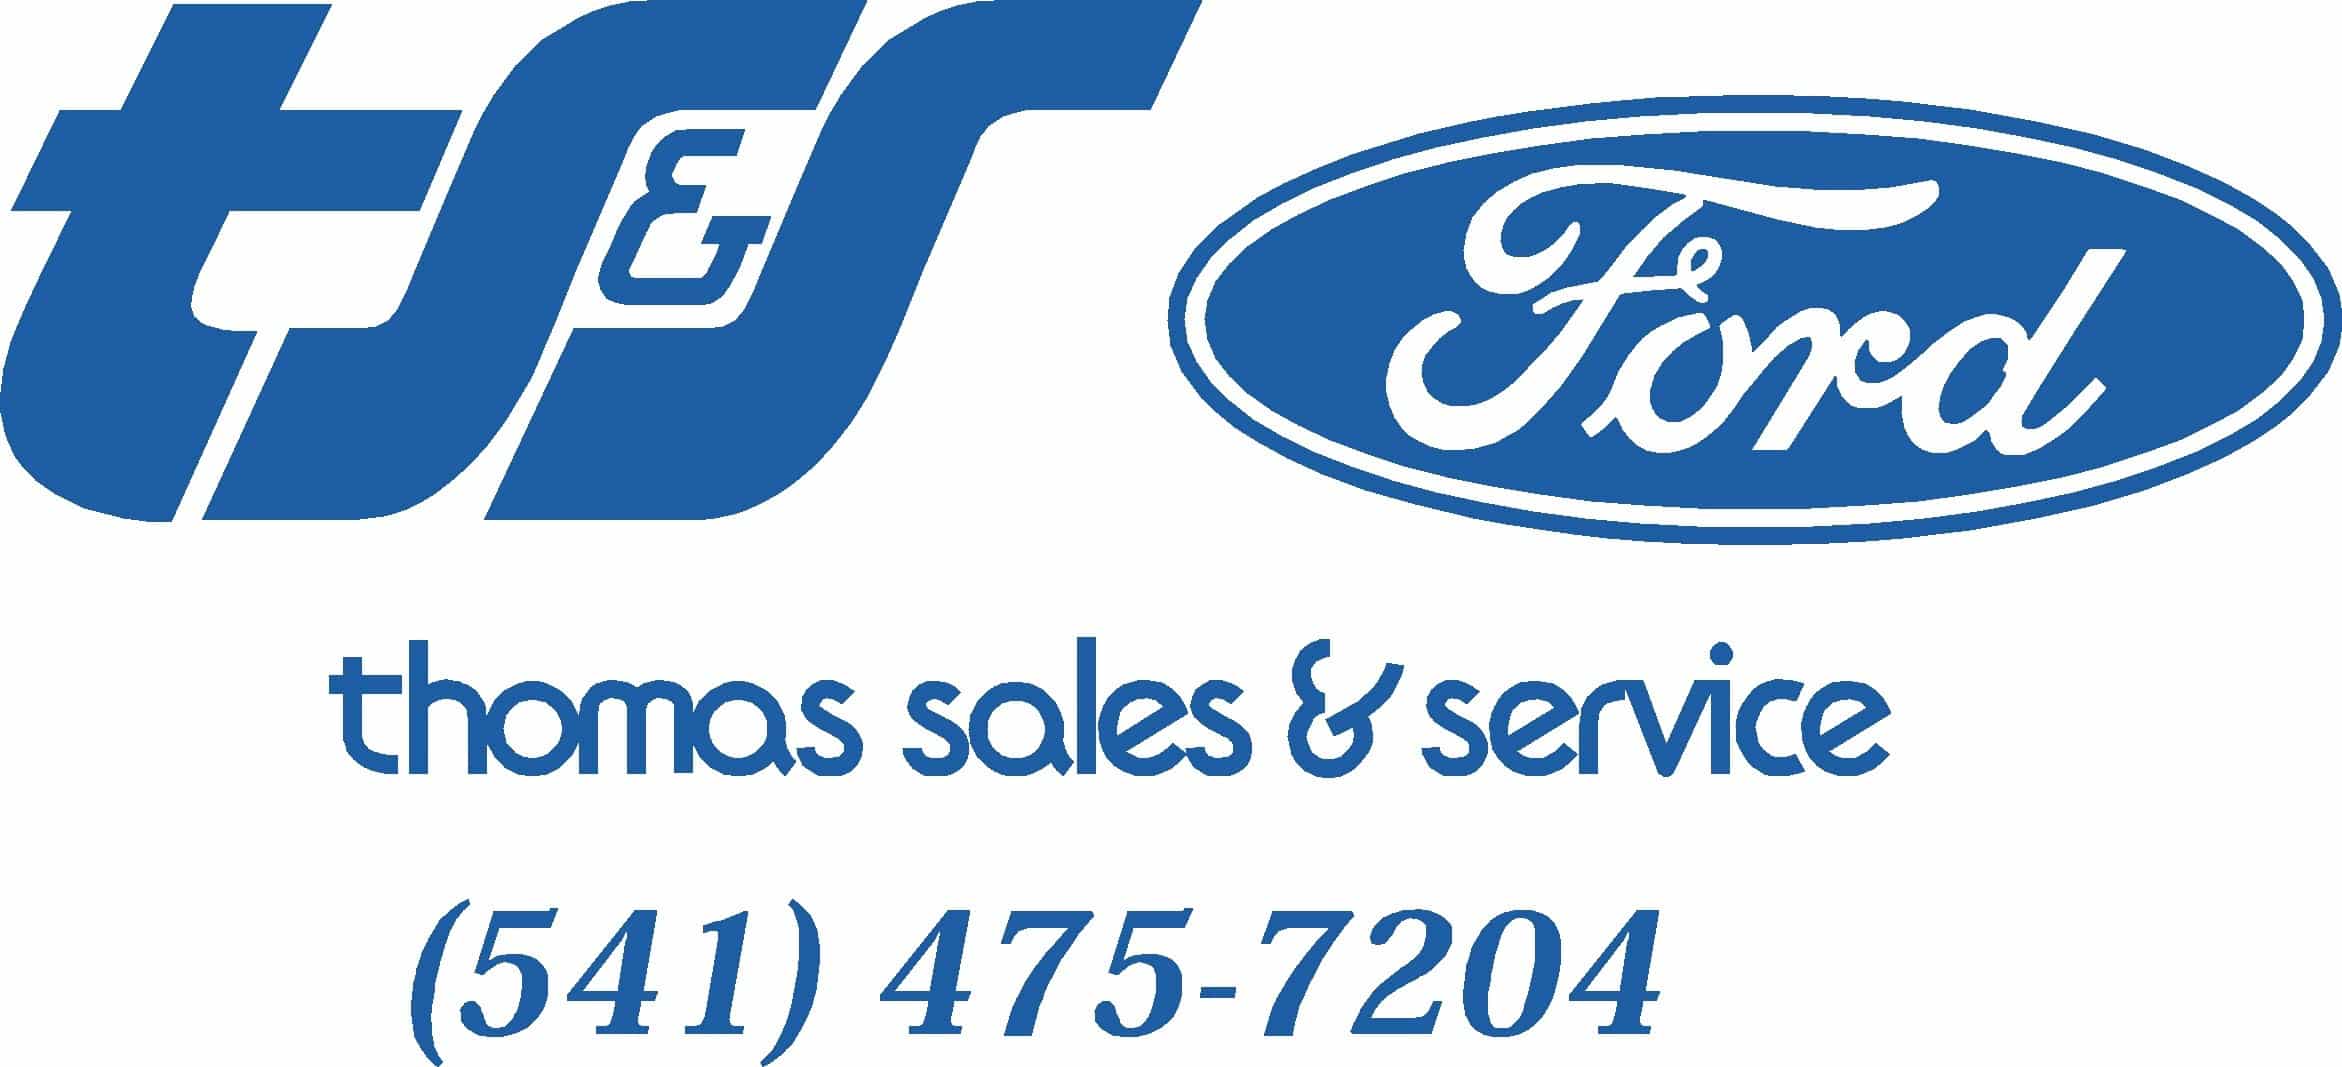 thomas-sales-and-service-ford-logo.jpg